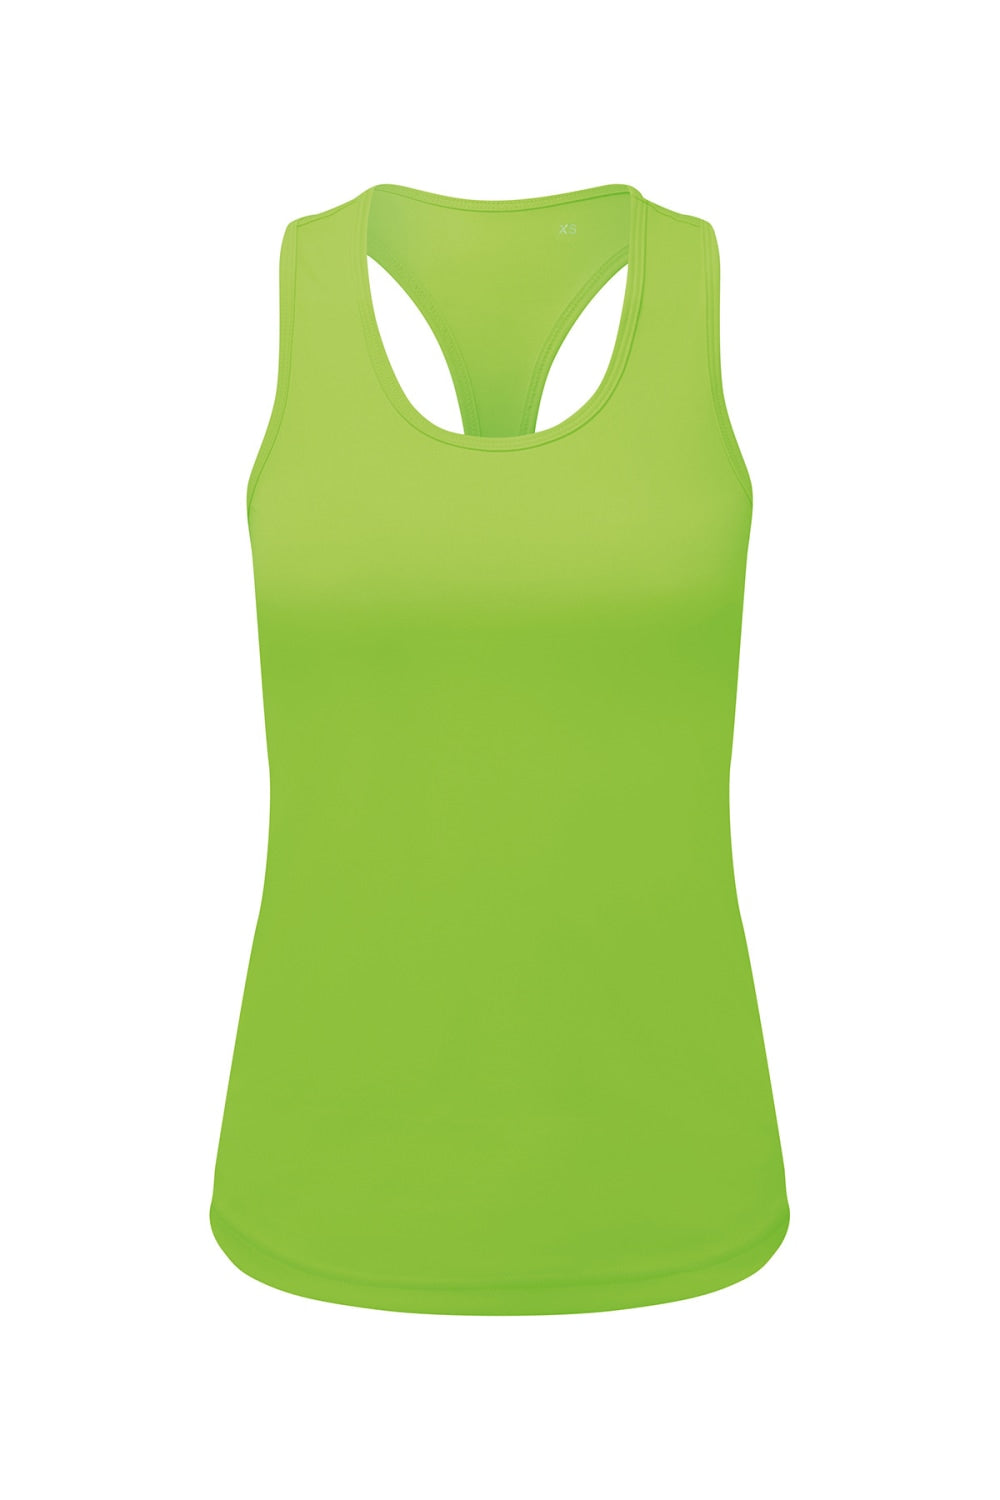 TriDri Womens/Ladies Performance Recycled Undershirt